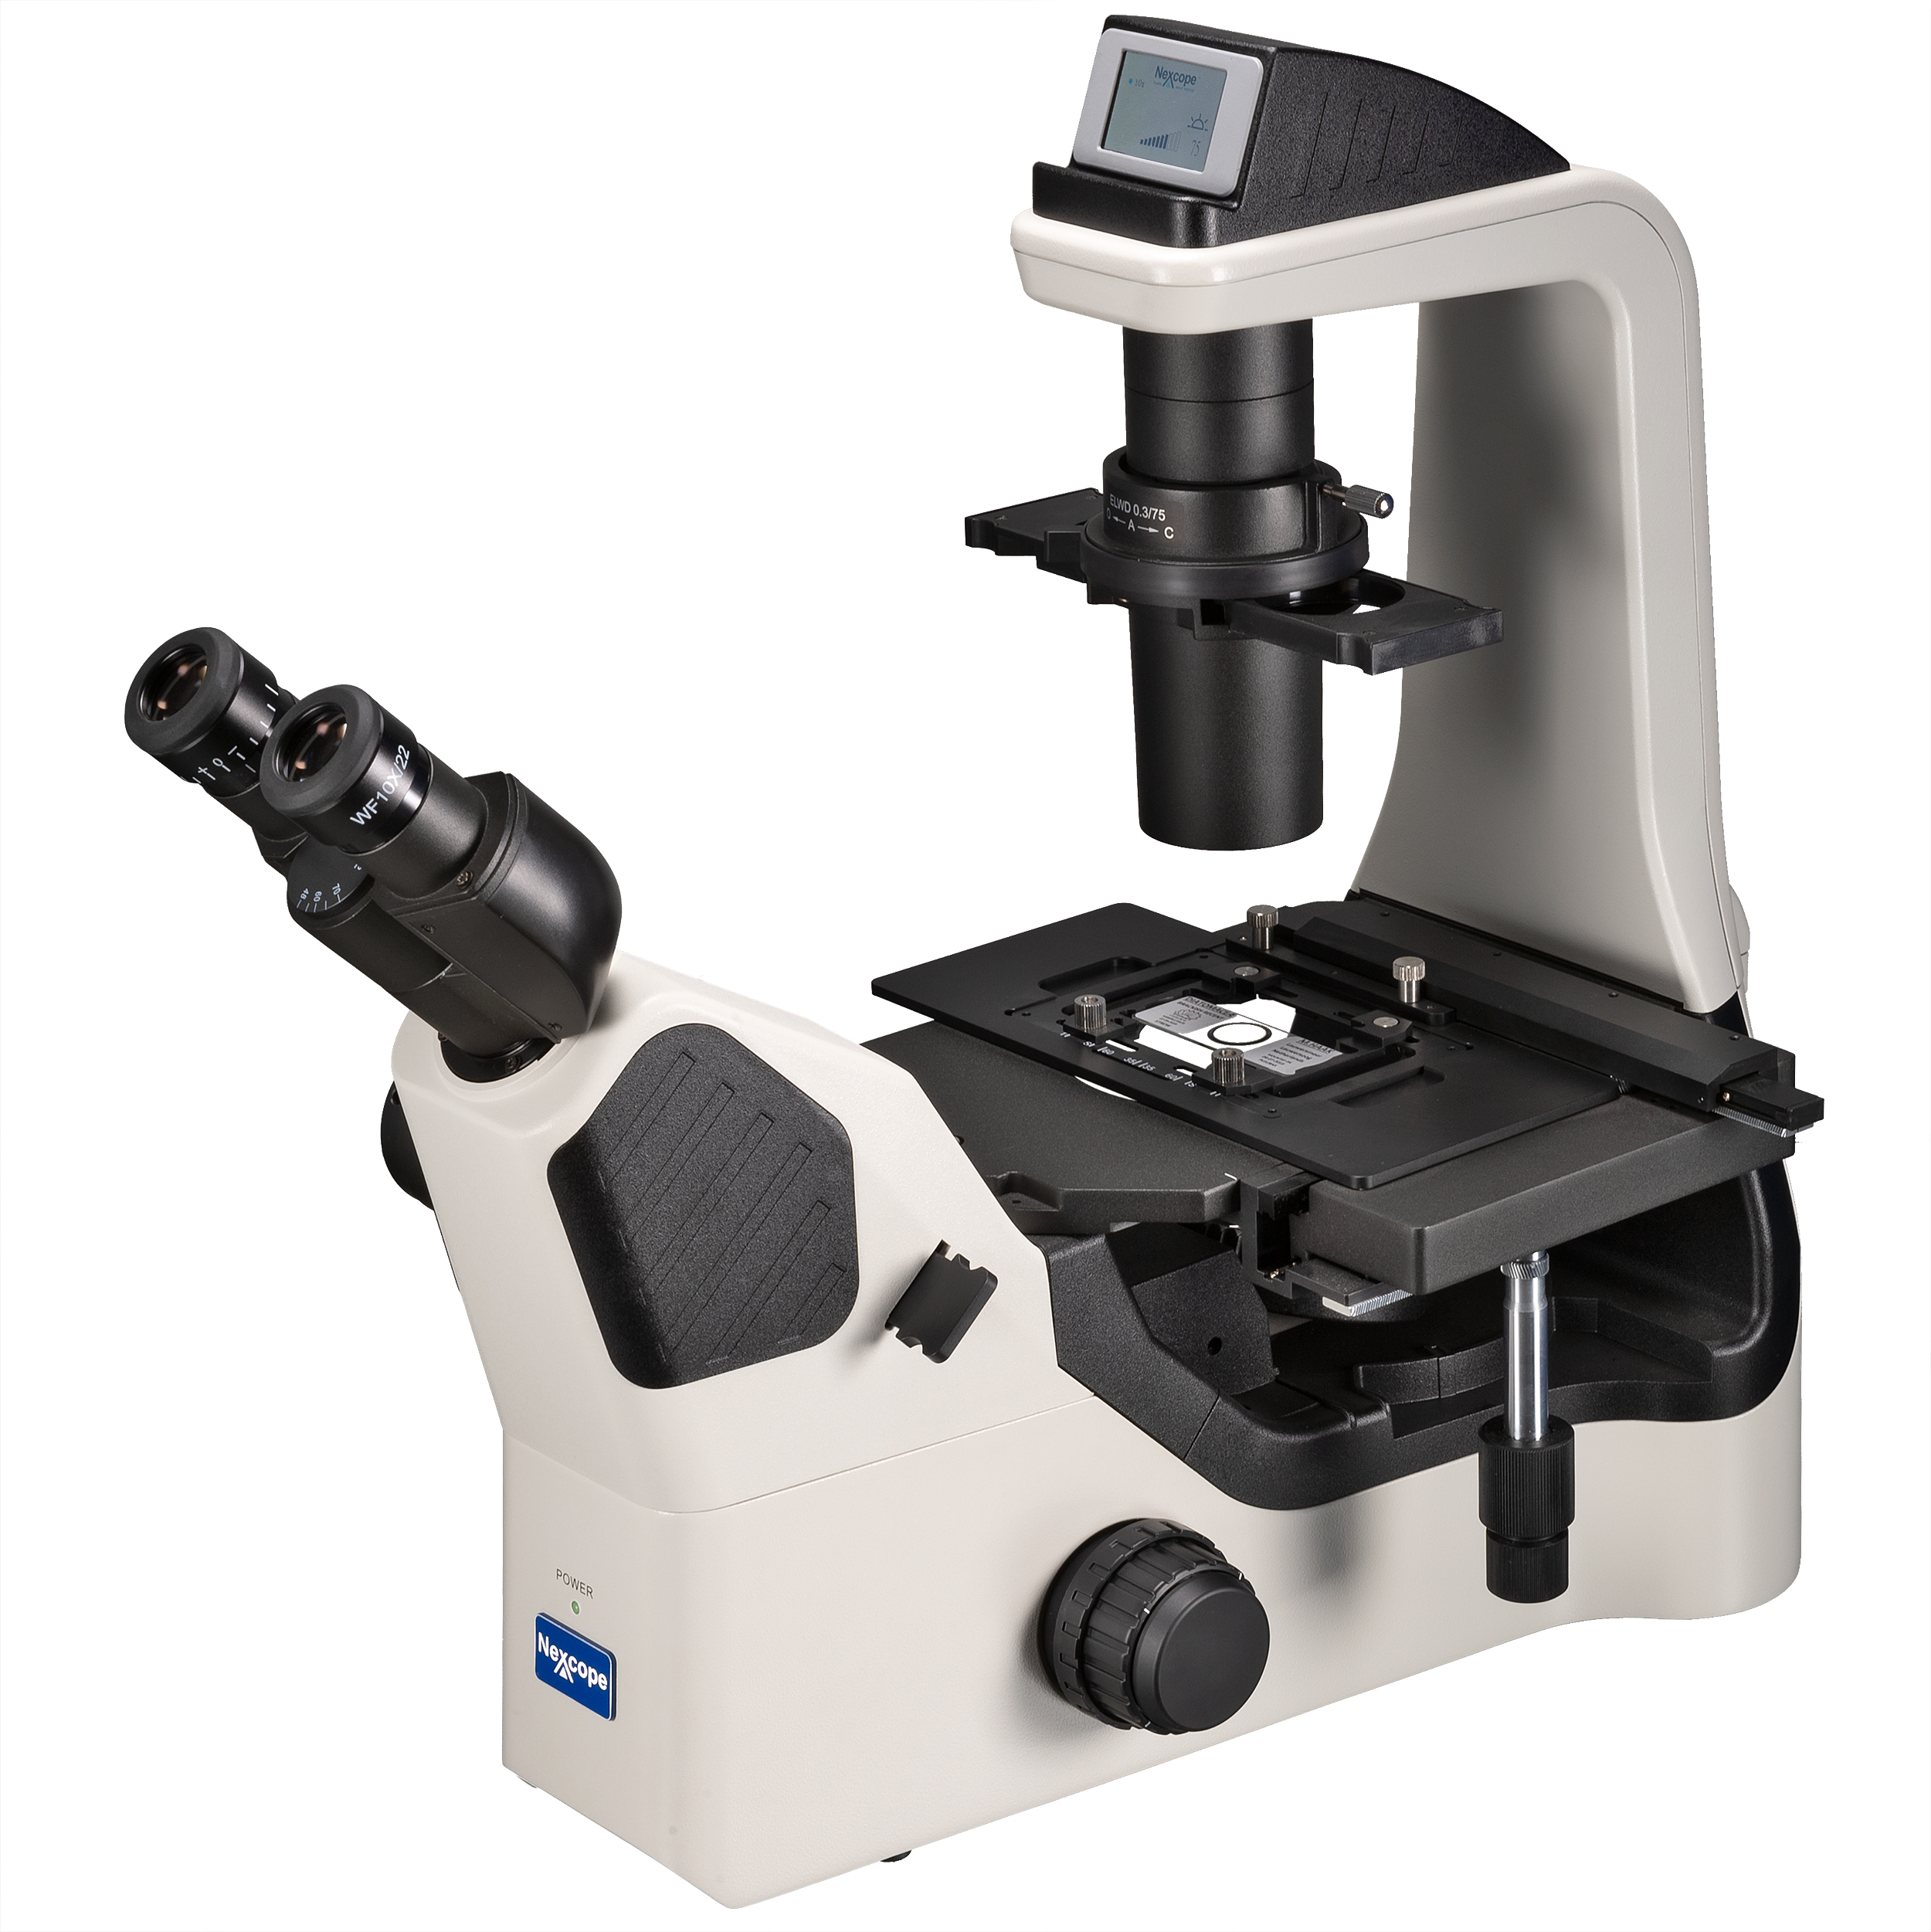 Nexcope NIB620 microscope de laboratoire inversé professionnel à contraste de phase